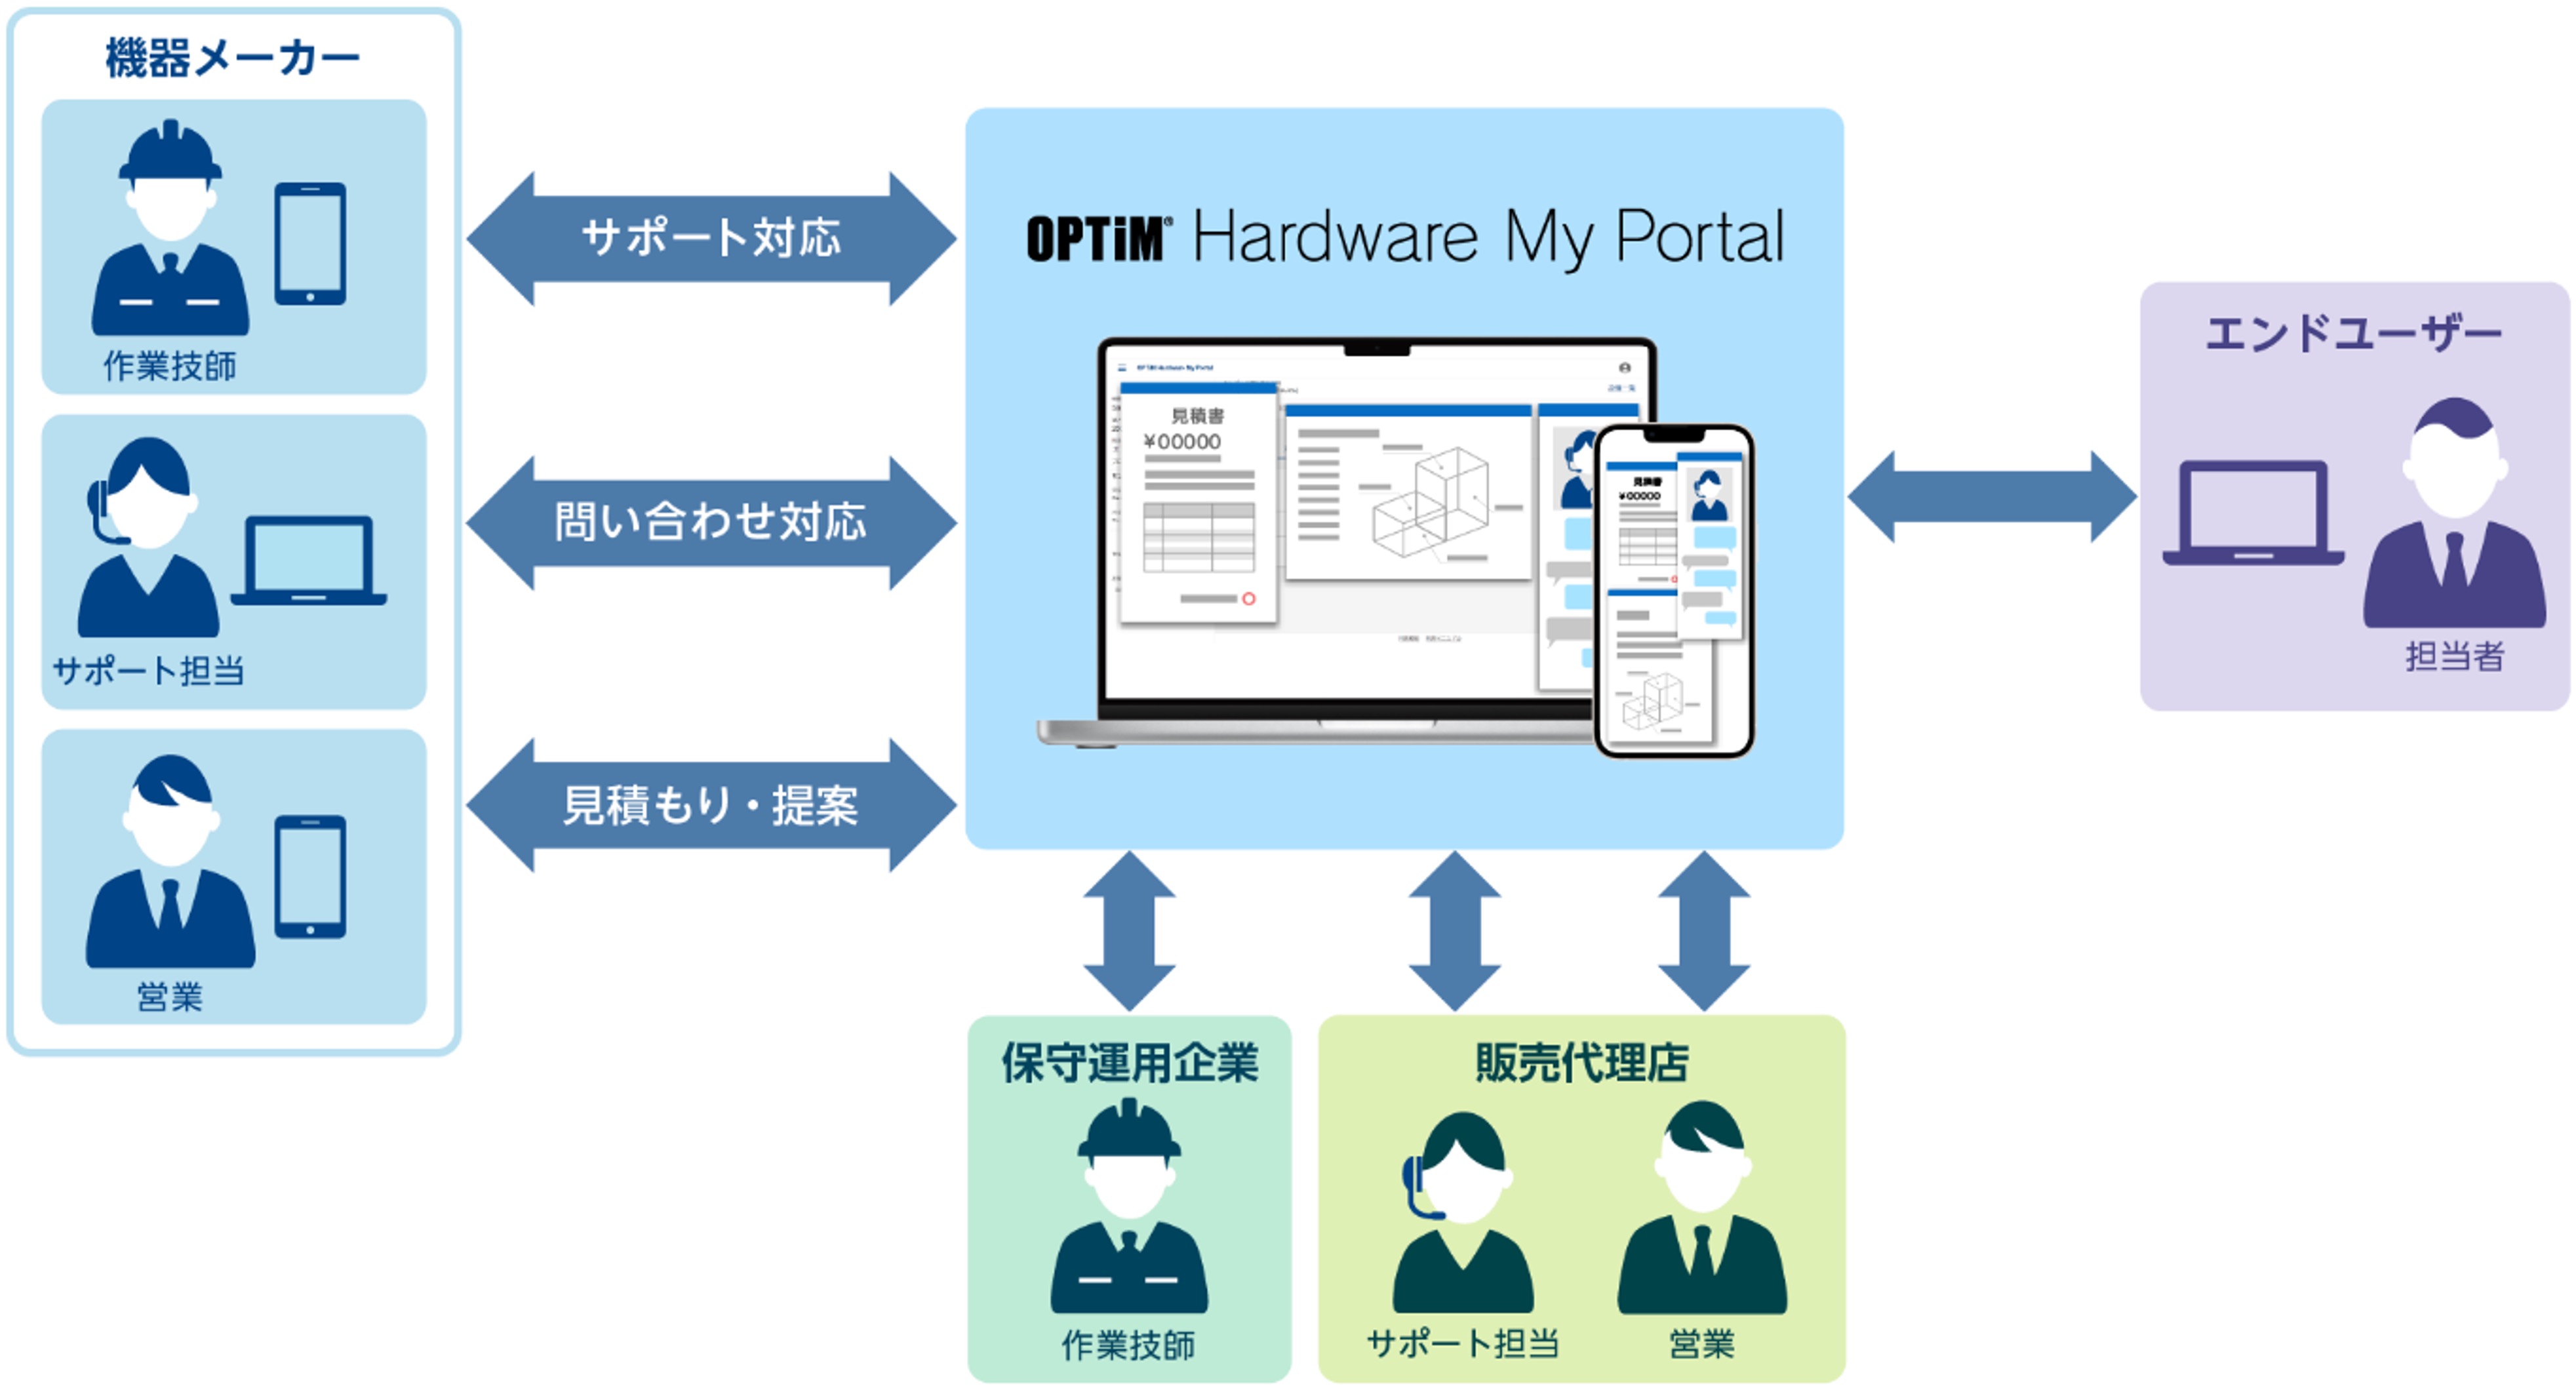 OPTiM Hardware My Portal 営業保守サポートイメージ